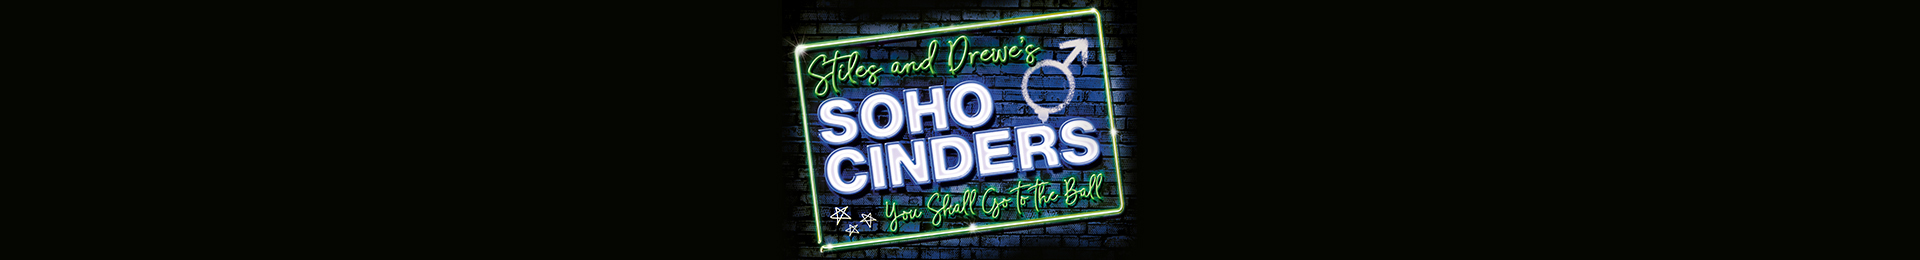 Soho Cinders banner image